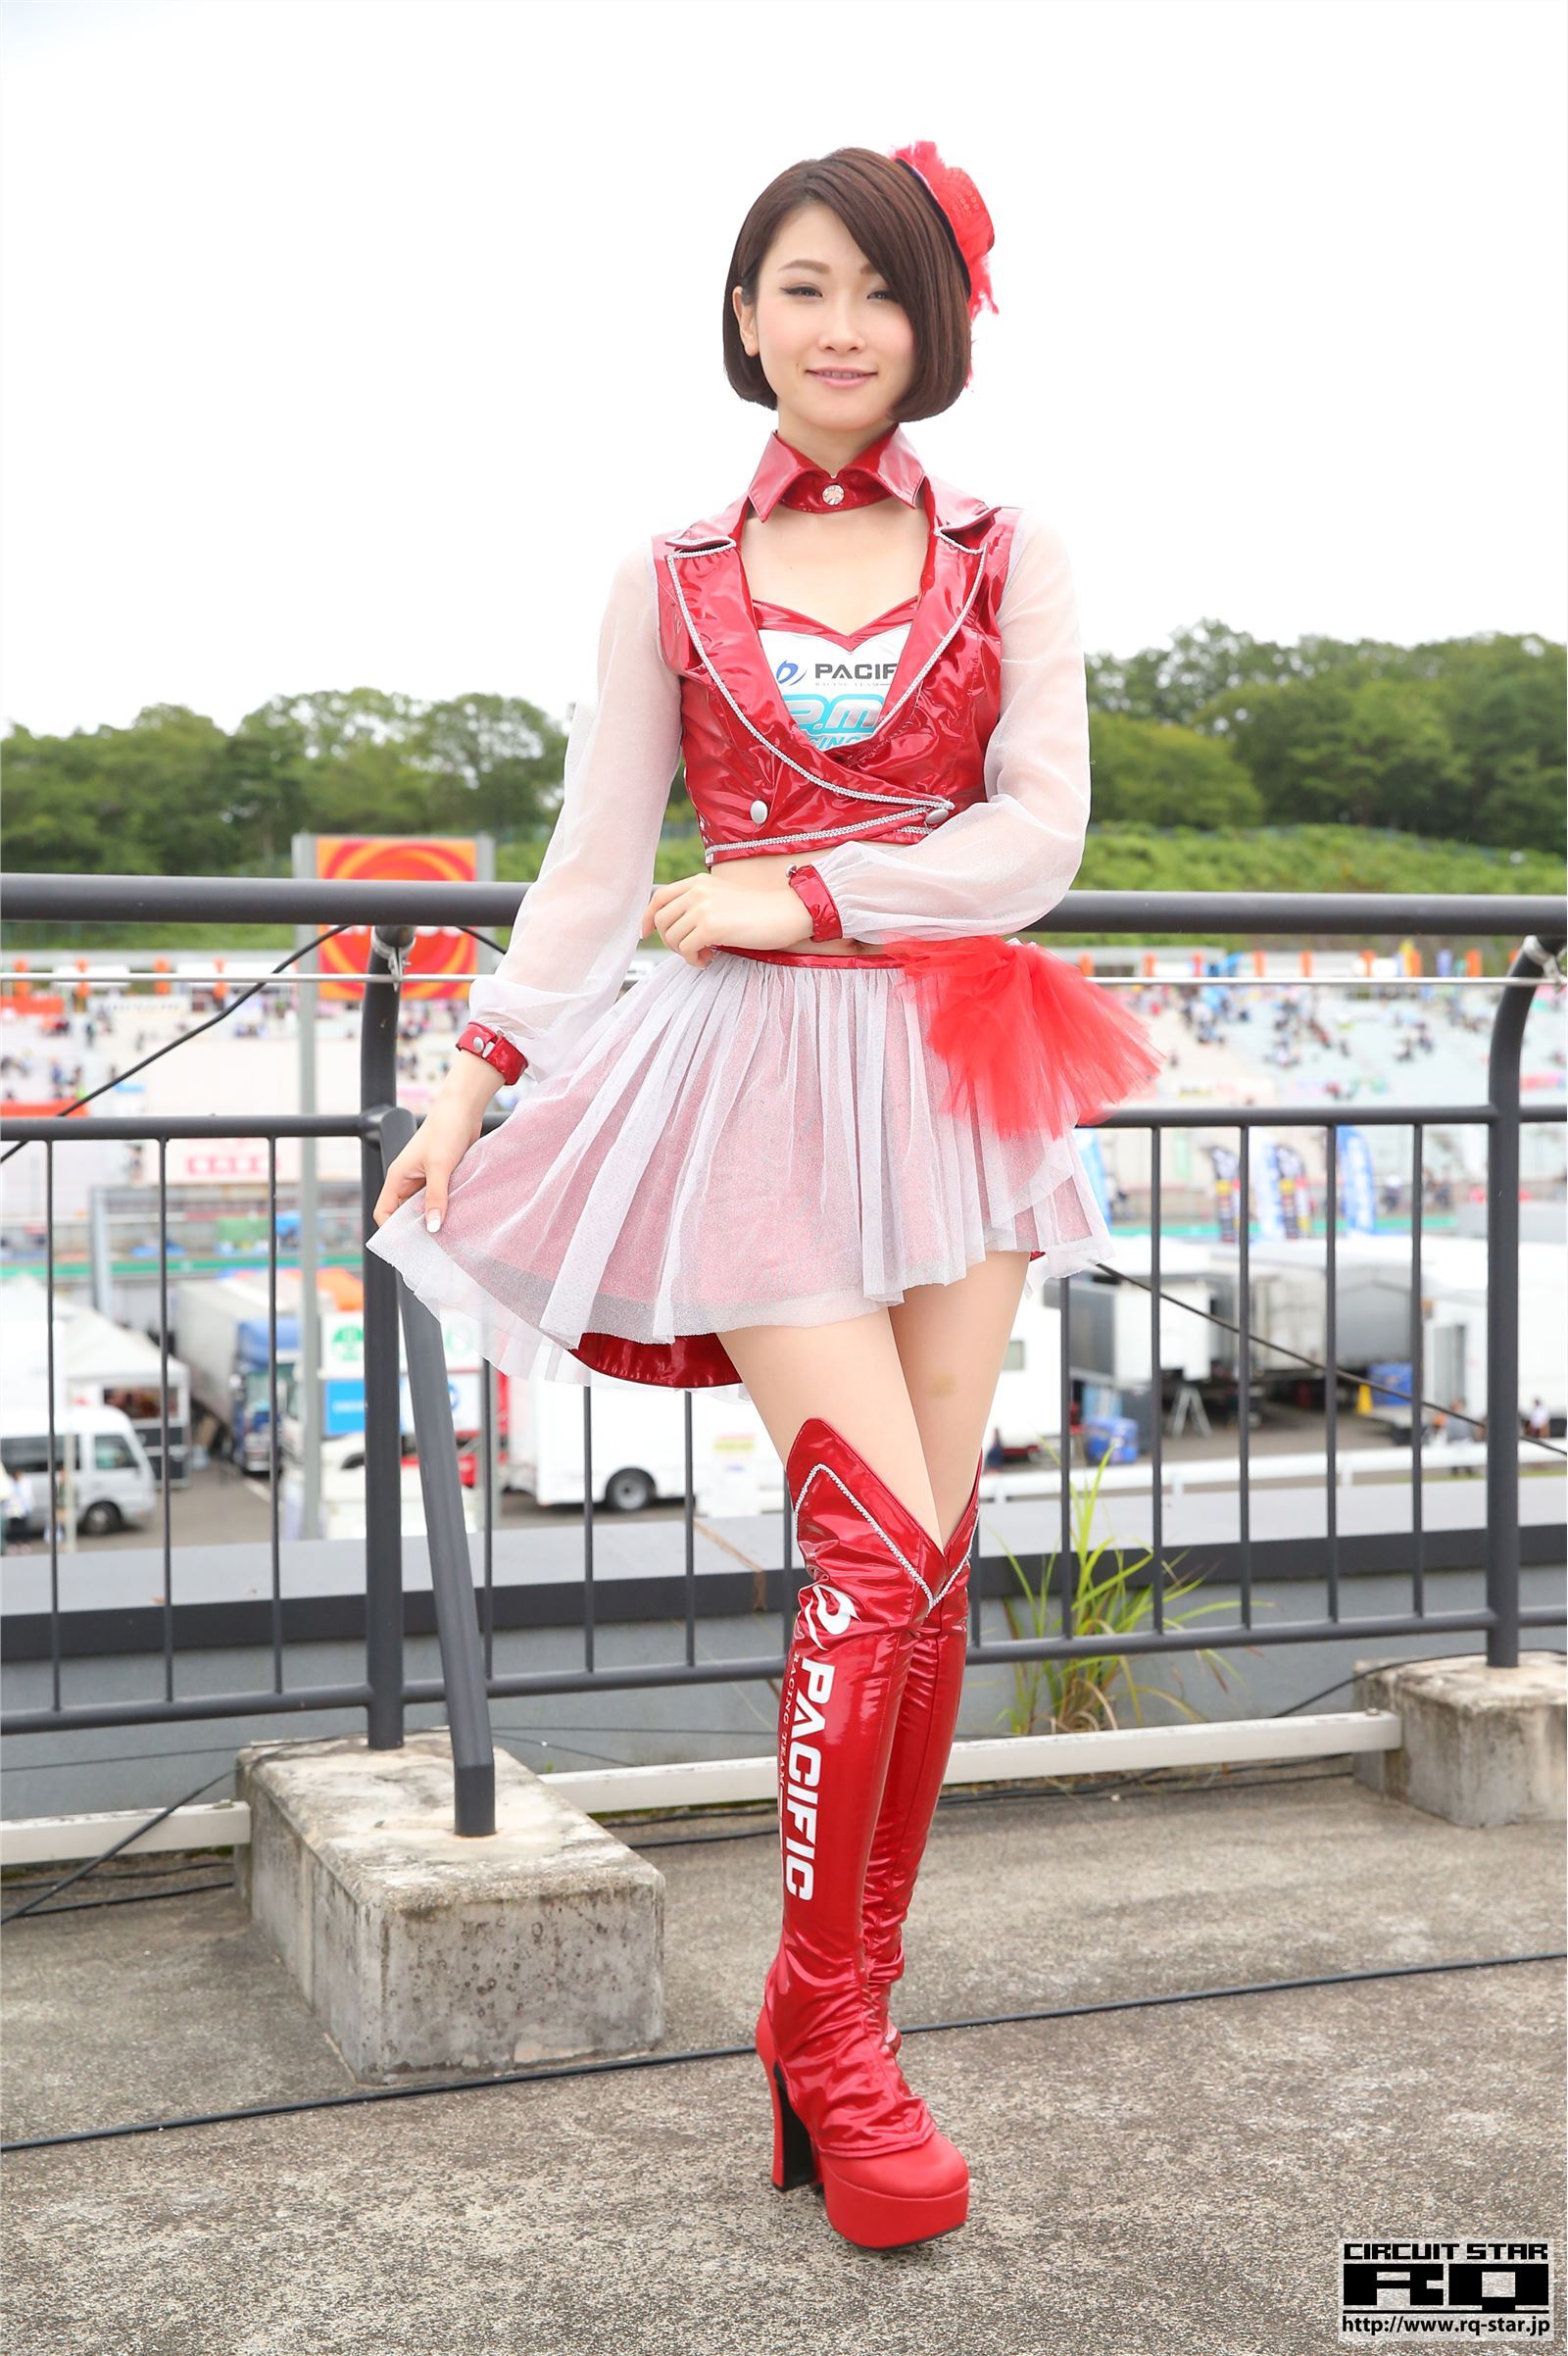 [rq-star] may 02, 2018 Kaya haruno Kazuo race queen